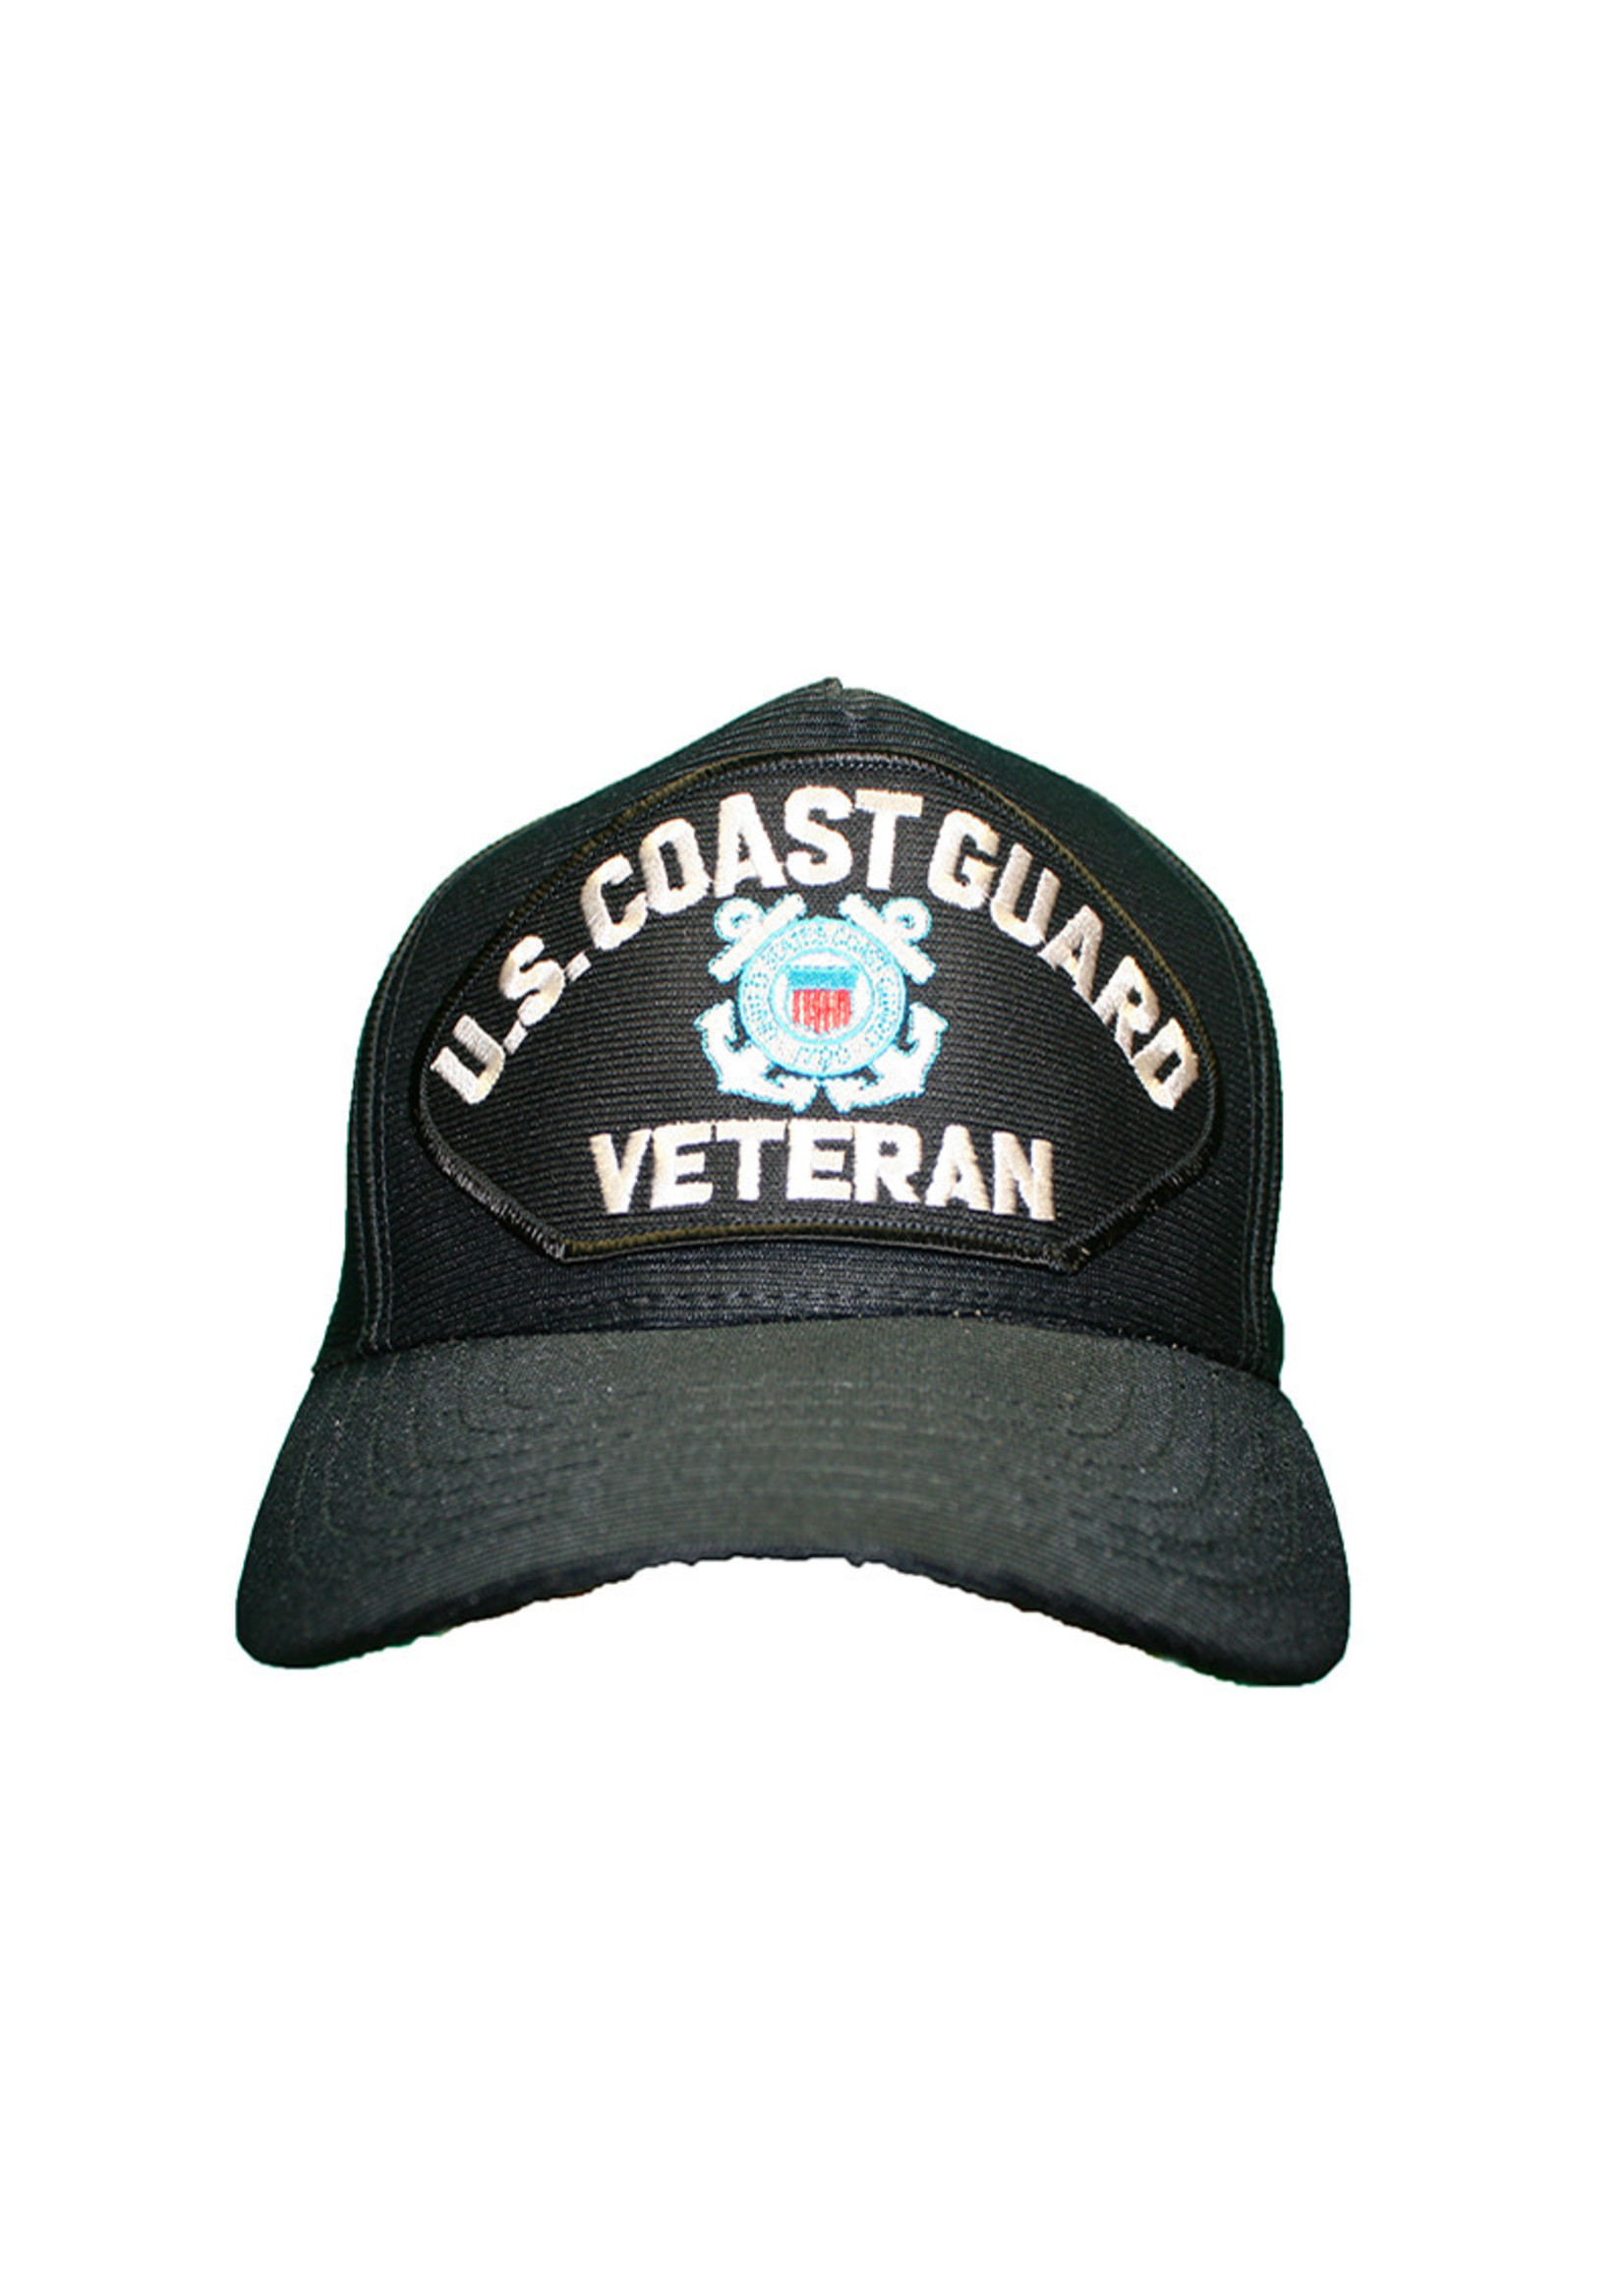 Eagle Crest Cap Coast Guard Veteran Black with Insignia